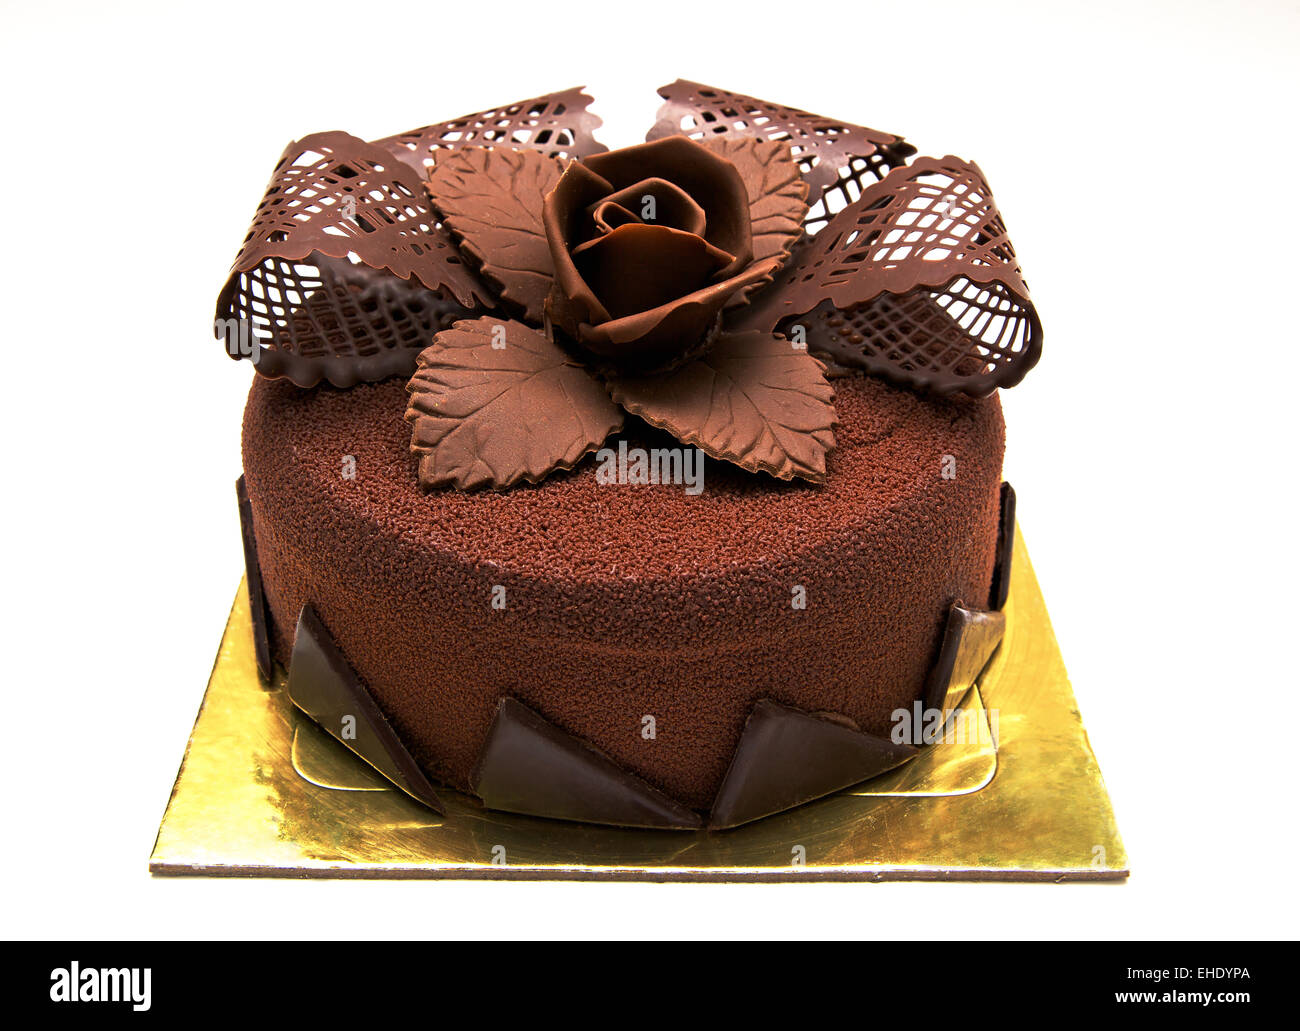 Chokolate cake with decorations Stock Photo